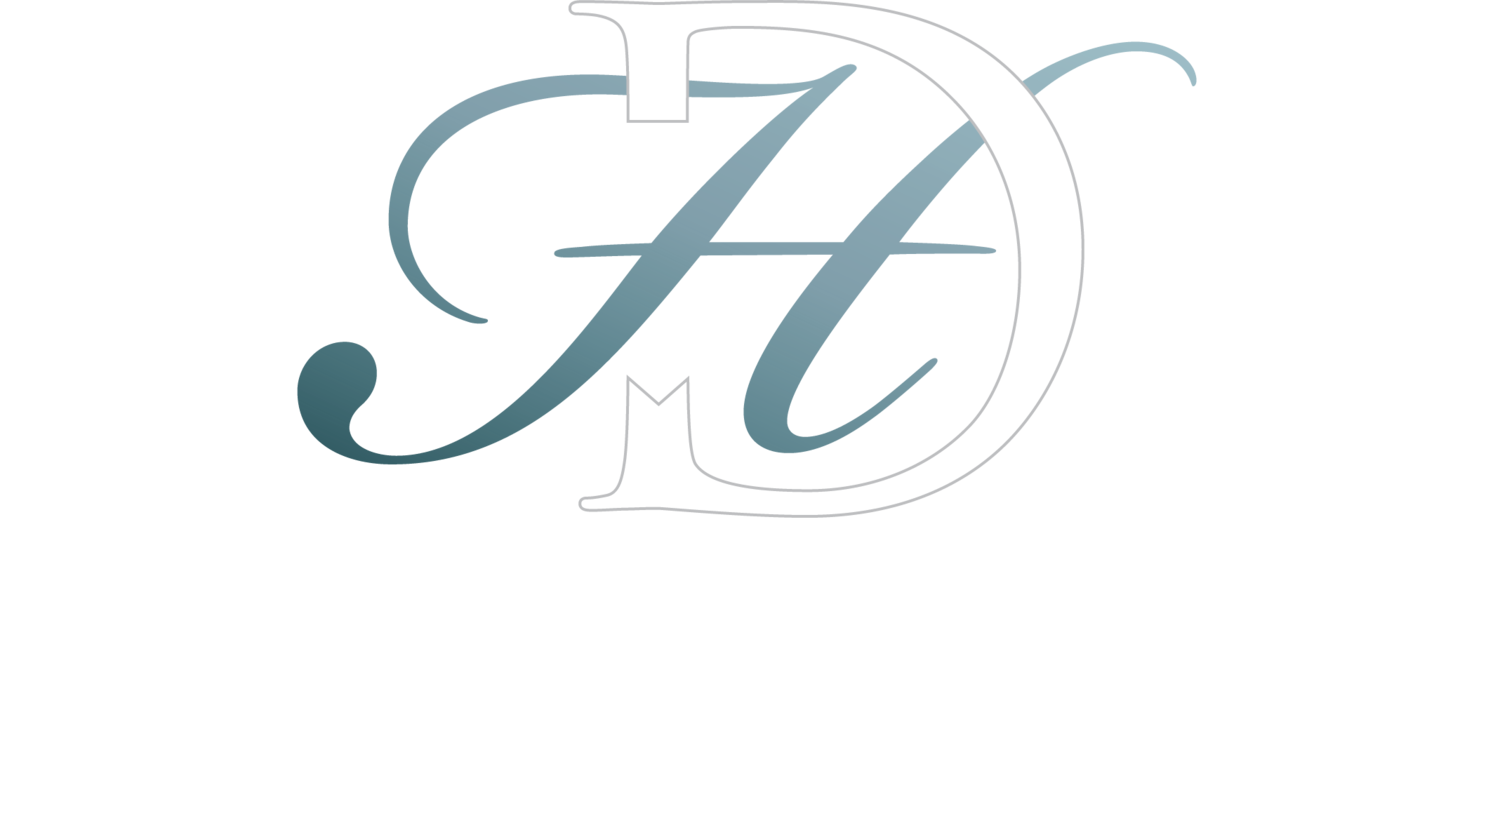 Diamond Hotels Management Inc.